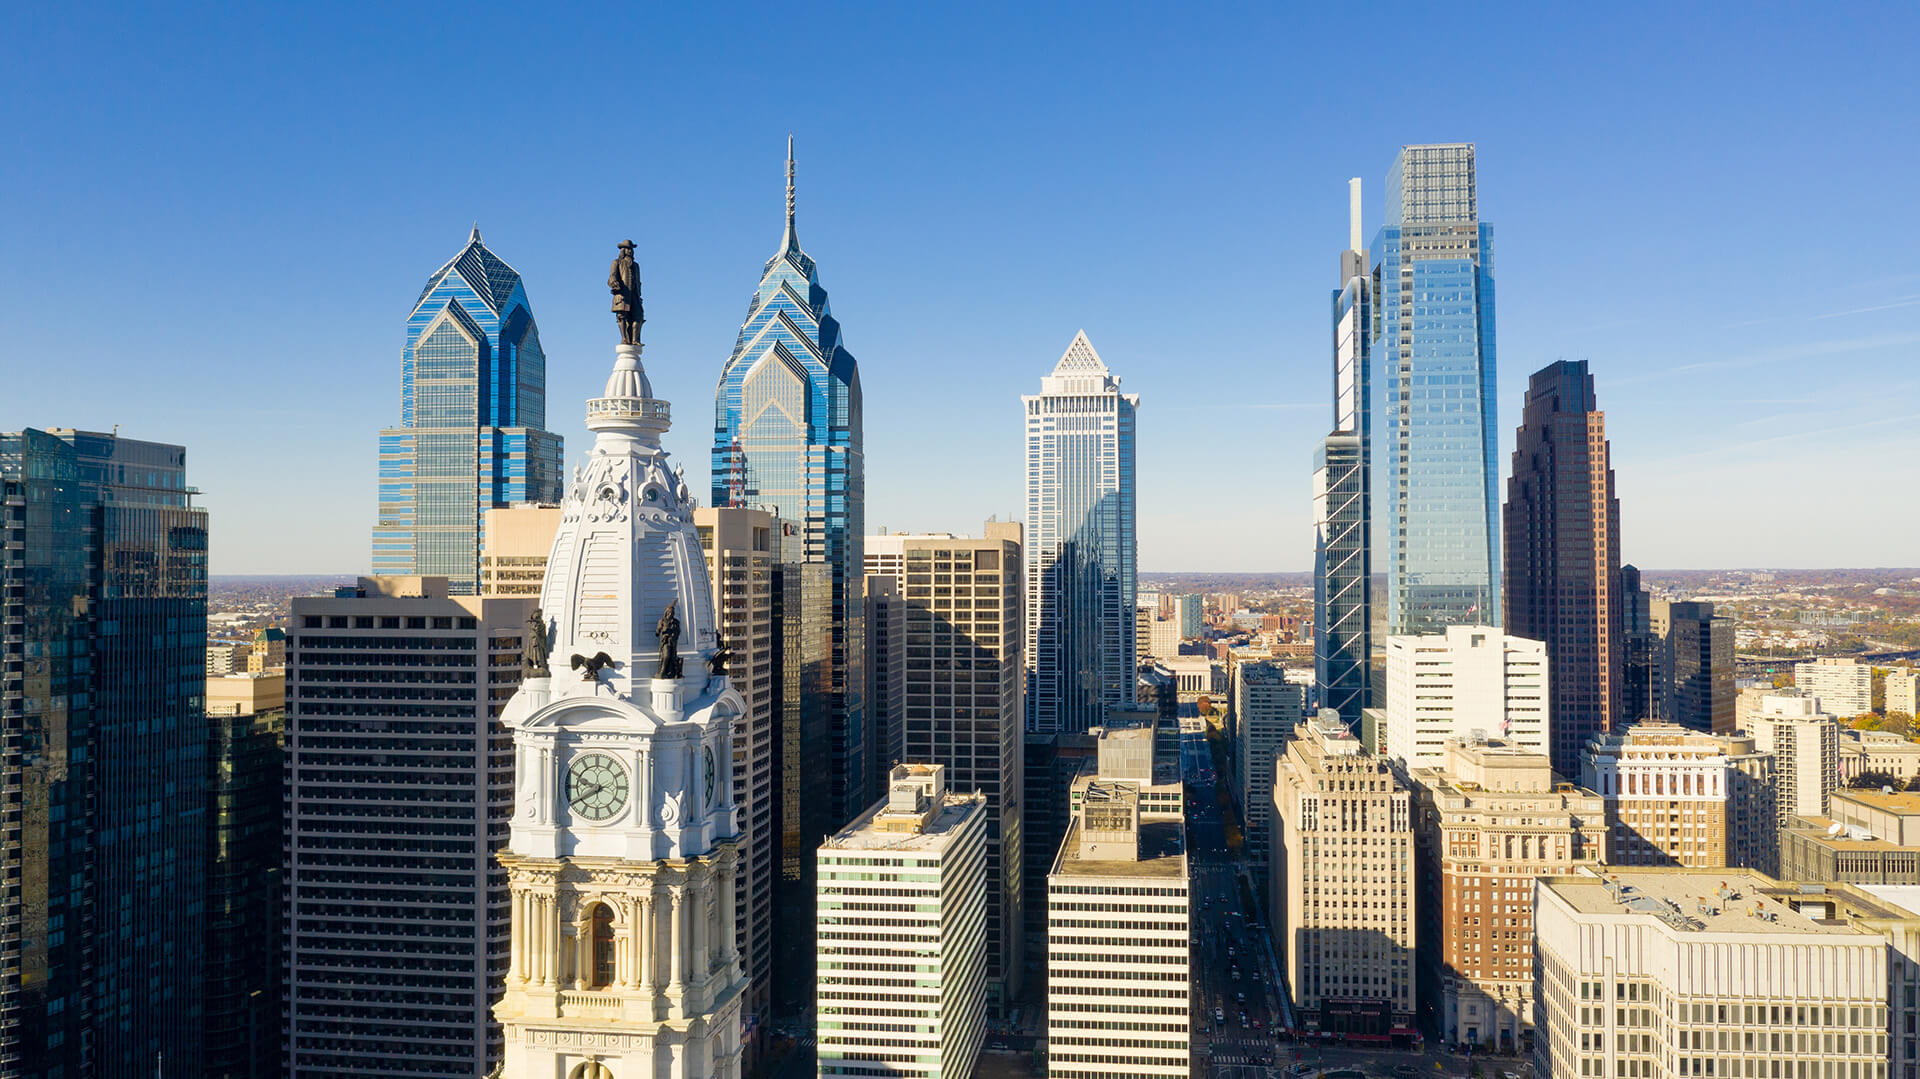 Skyline of downtown Philadelphia, Pennsylvania